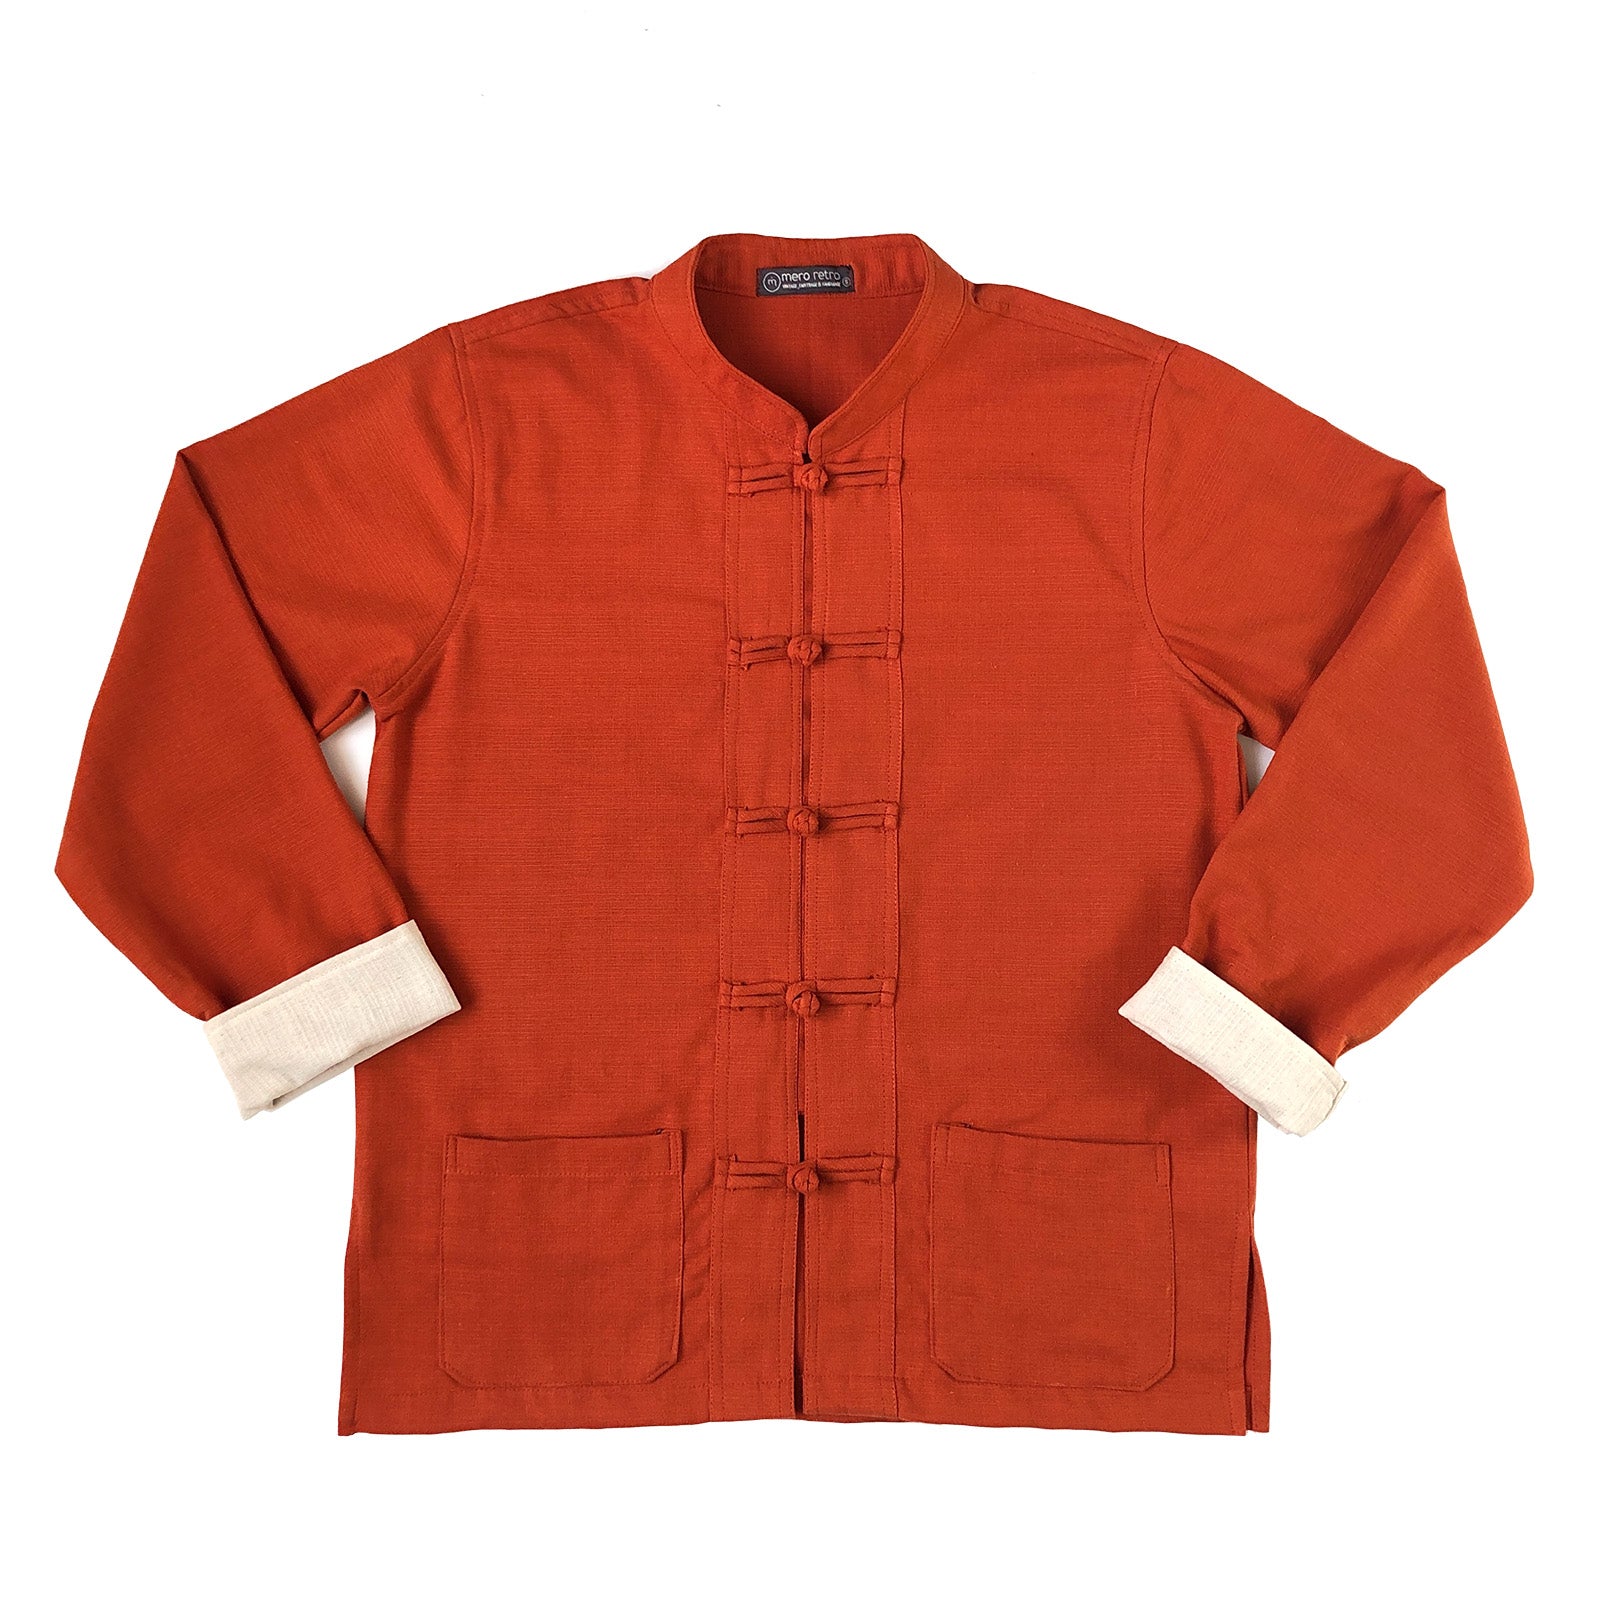 Unisex Fairtrade Ribbed Cotton Mandarin Jacket / Shirt Orange